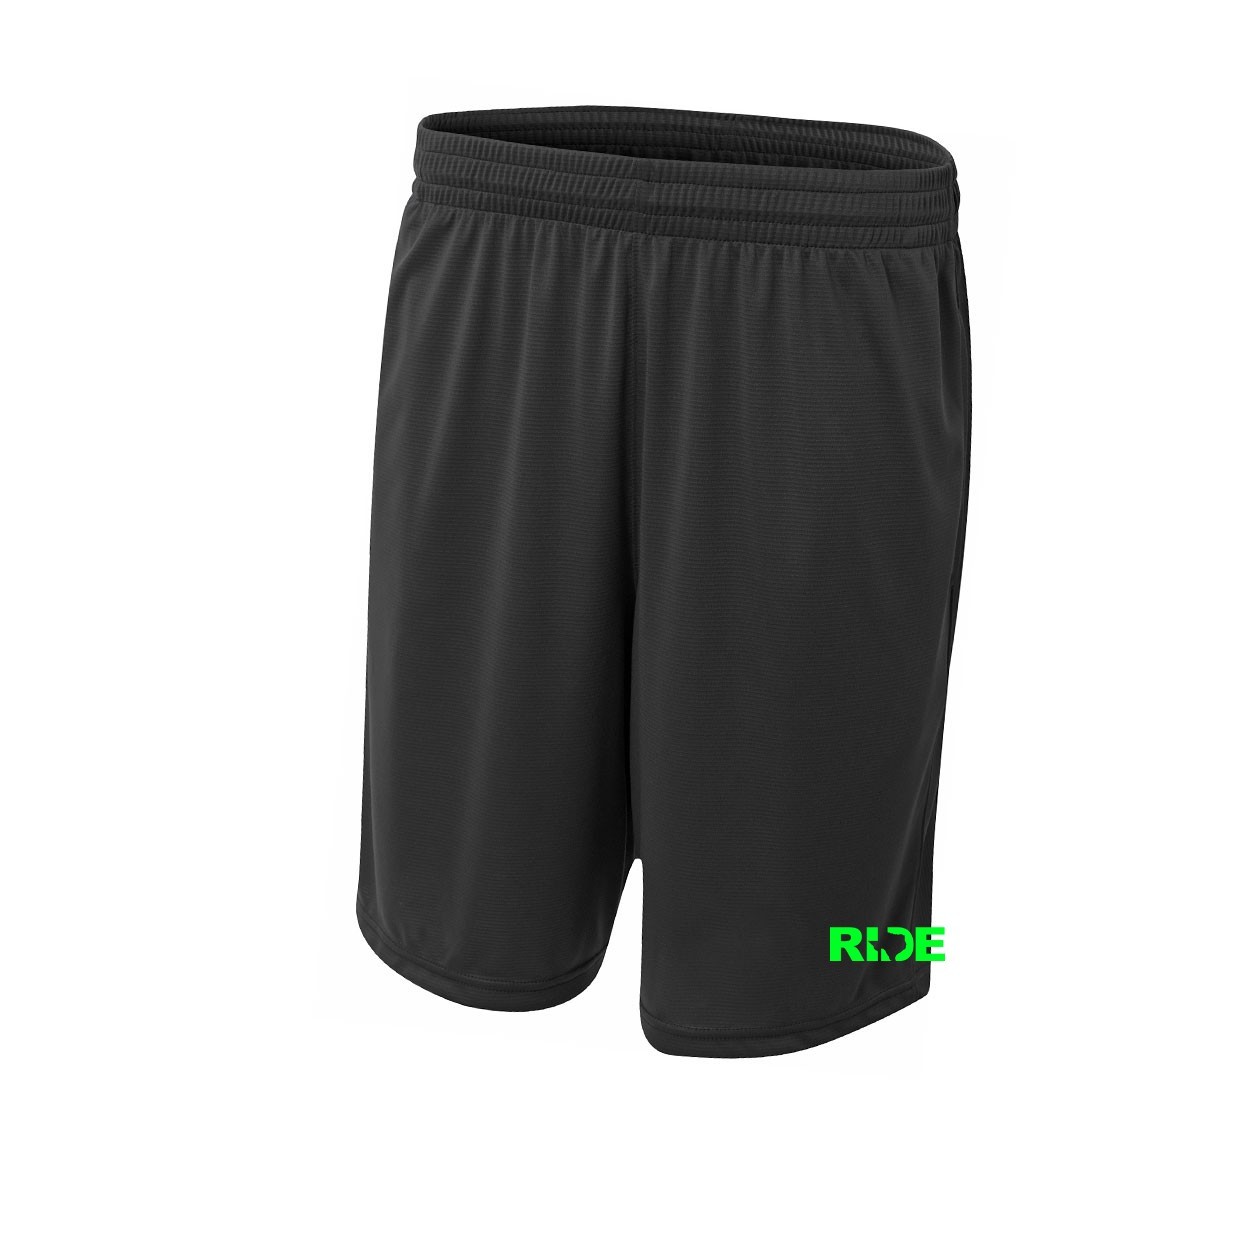 Ride Texas Classic Youth Unisex Shorts Black (Green Logo)